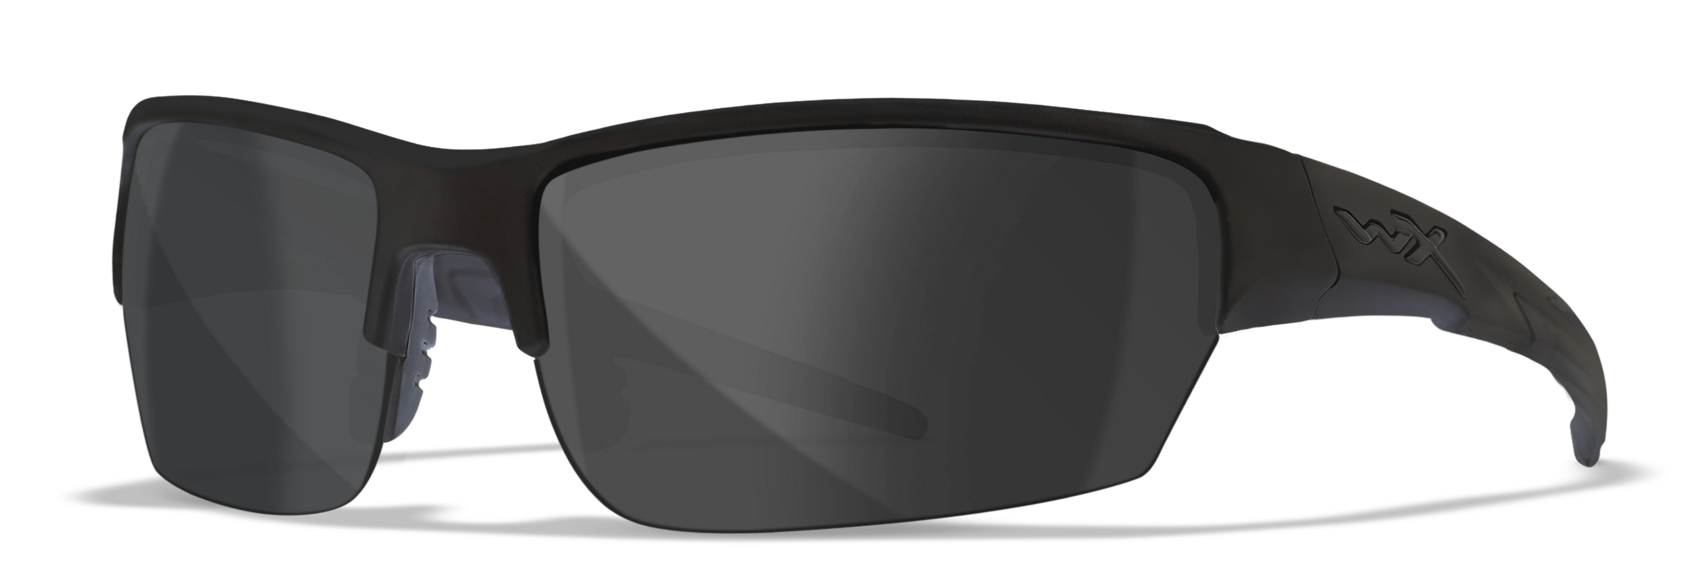 Wiley X WX SAINT Semi Rimless Sunglasses  Matte Black 69-14-130